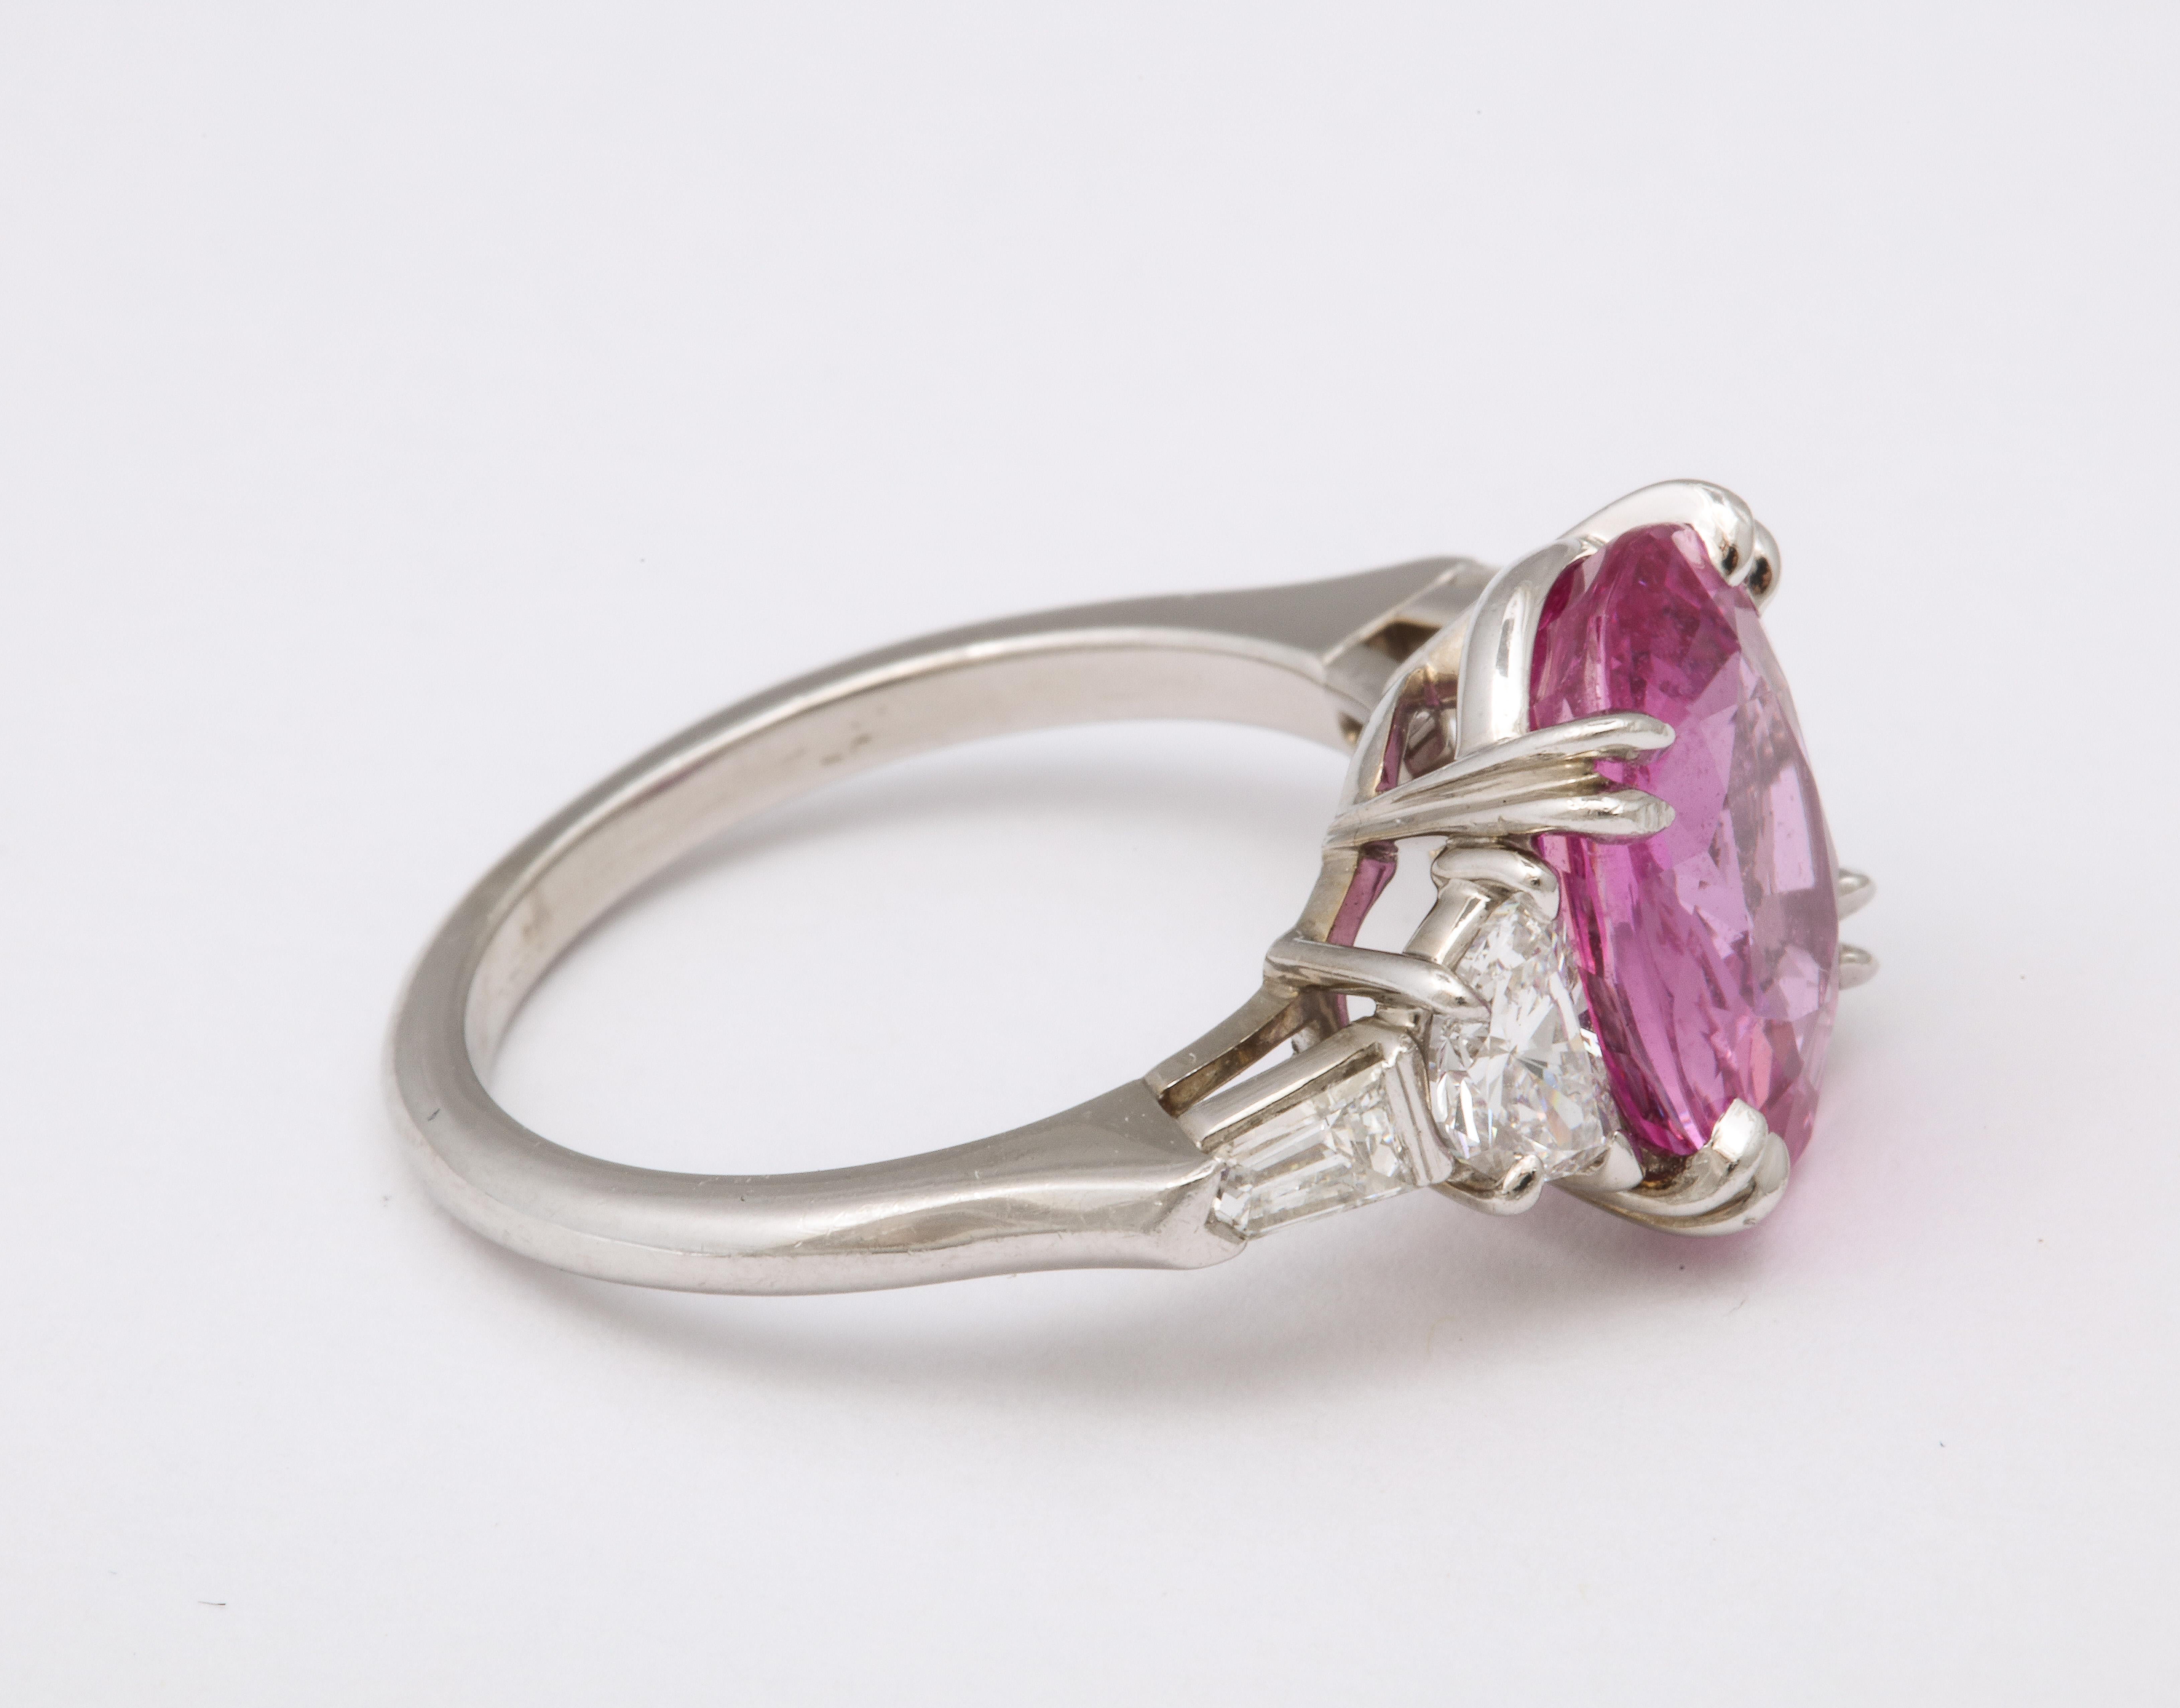 5 carat pink sapphire price